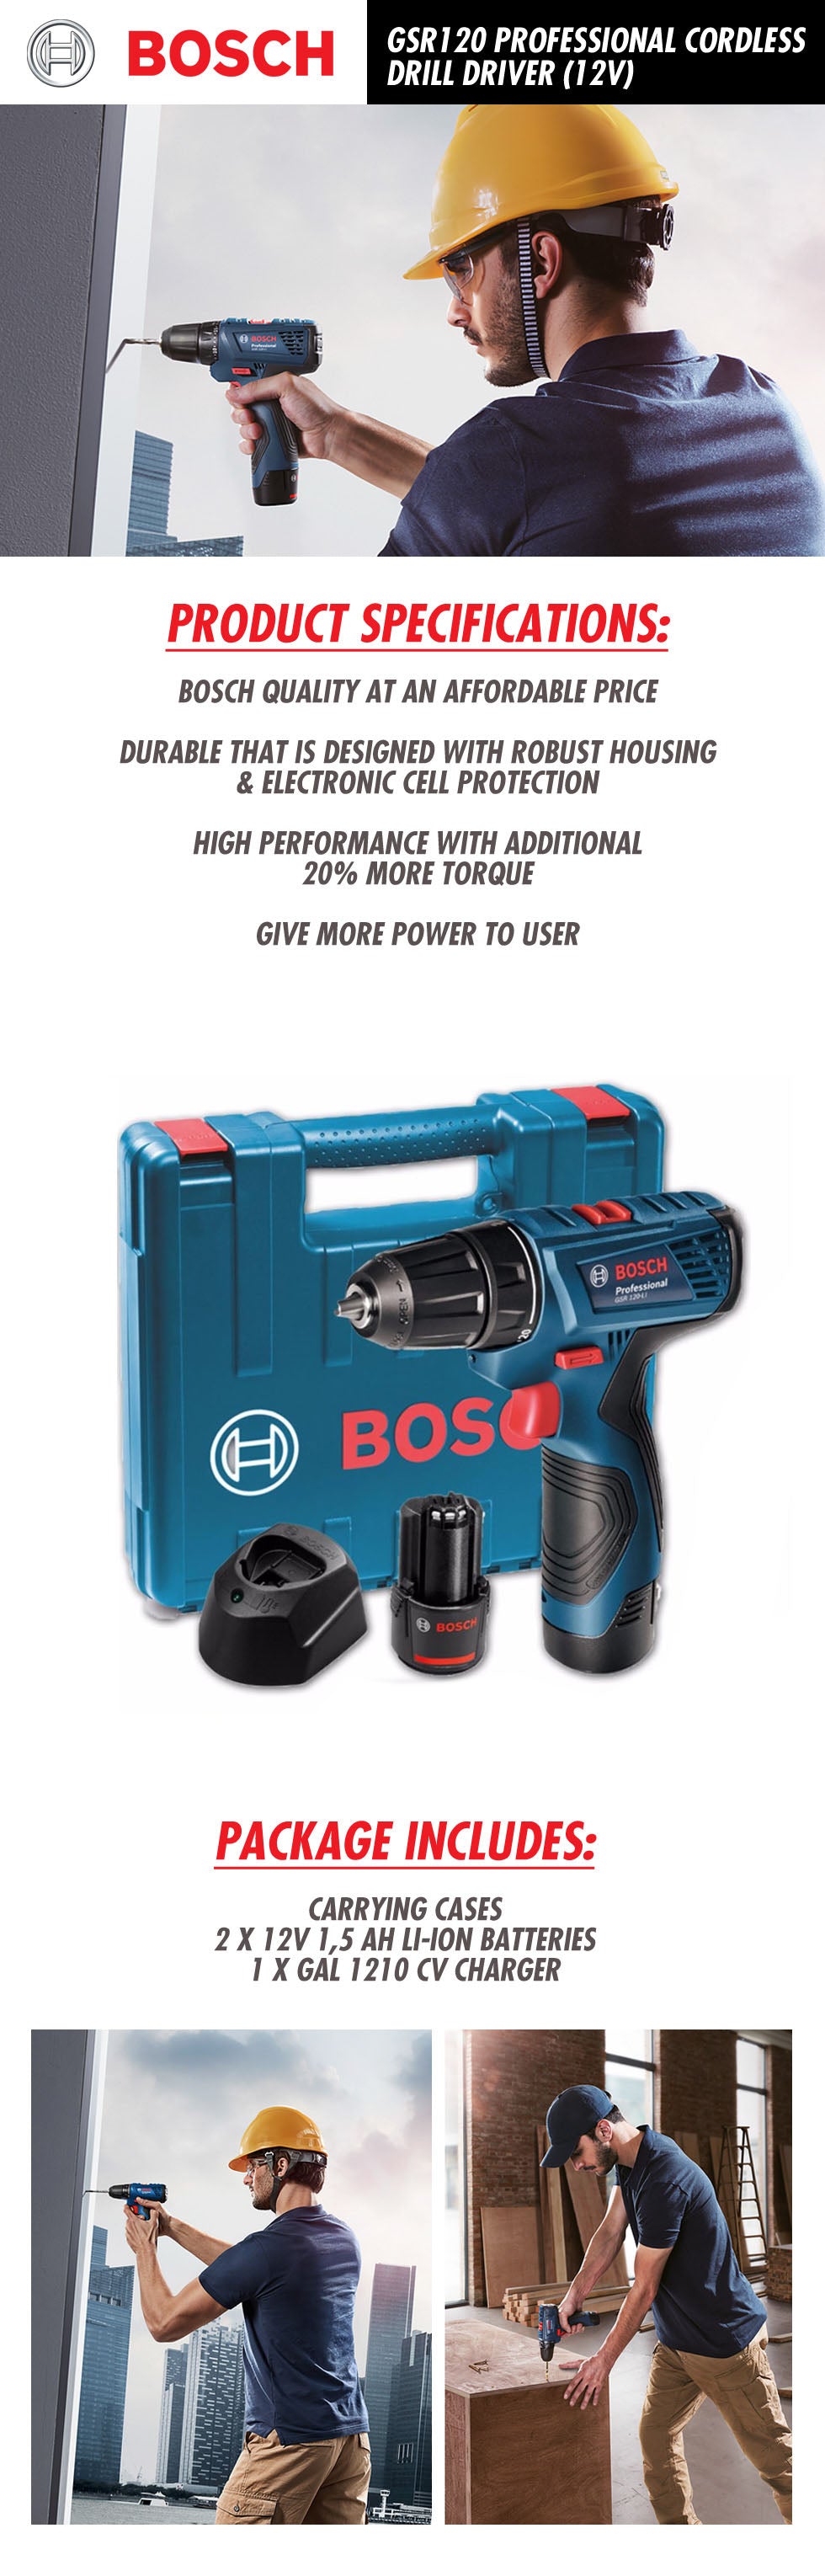 Bosch Drill Description